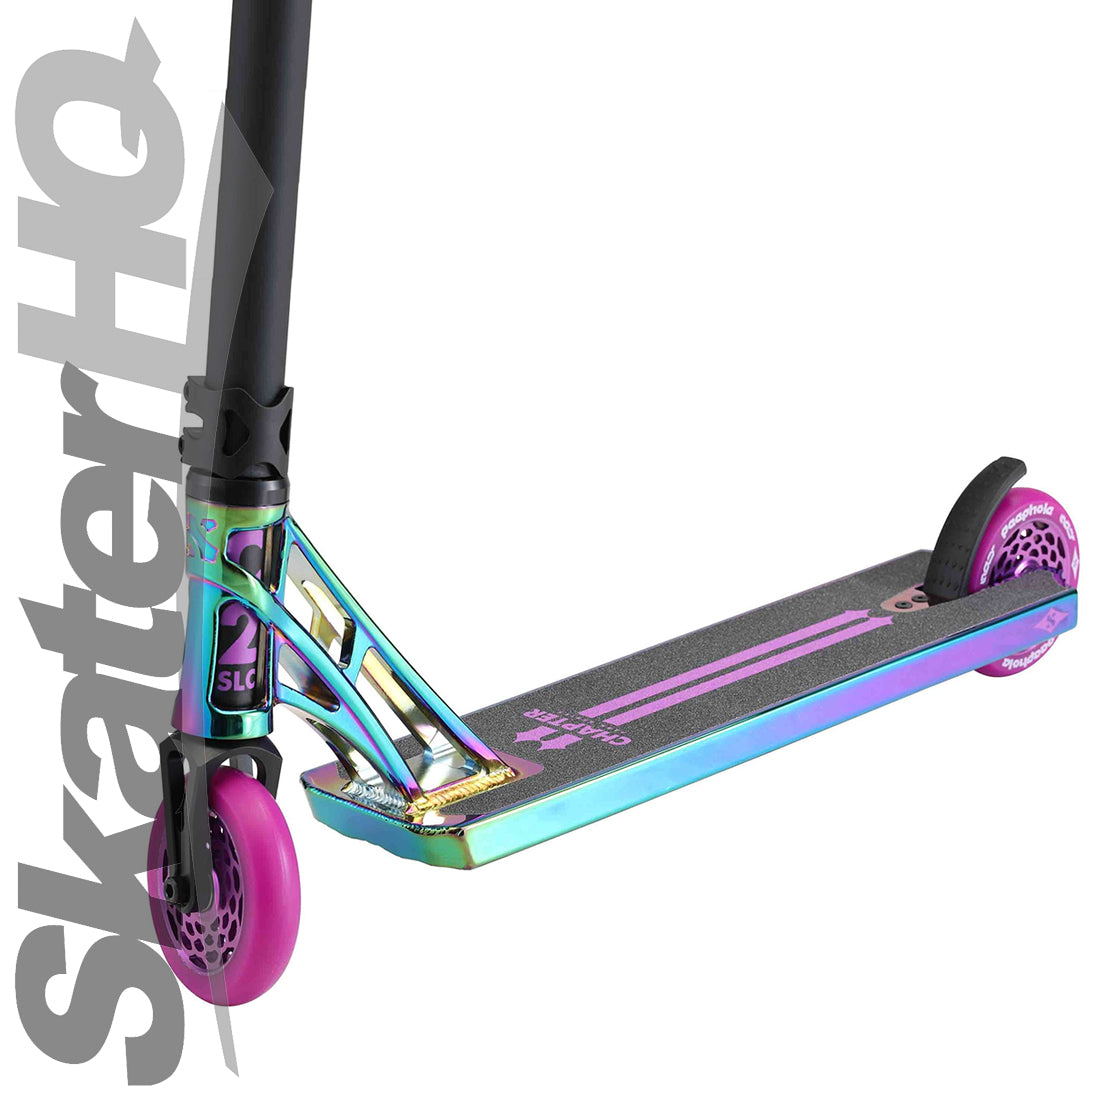 Sacrifice Chapter 2 Park Complete - Purple Neochrome Scooter Completes Trick